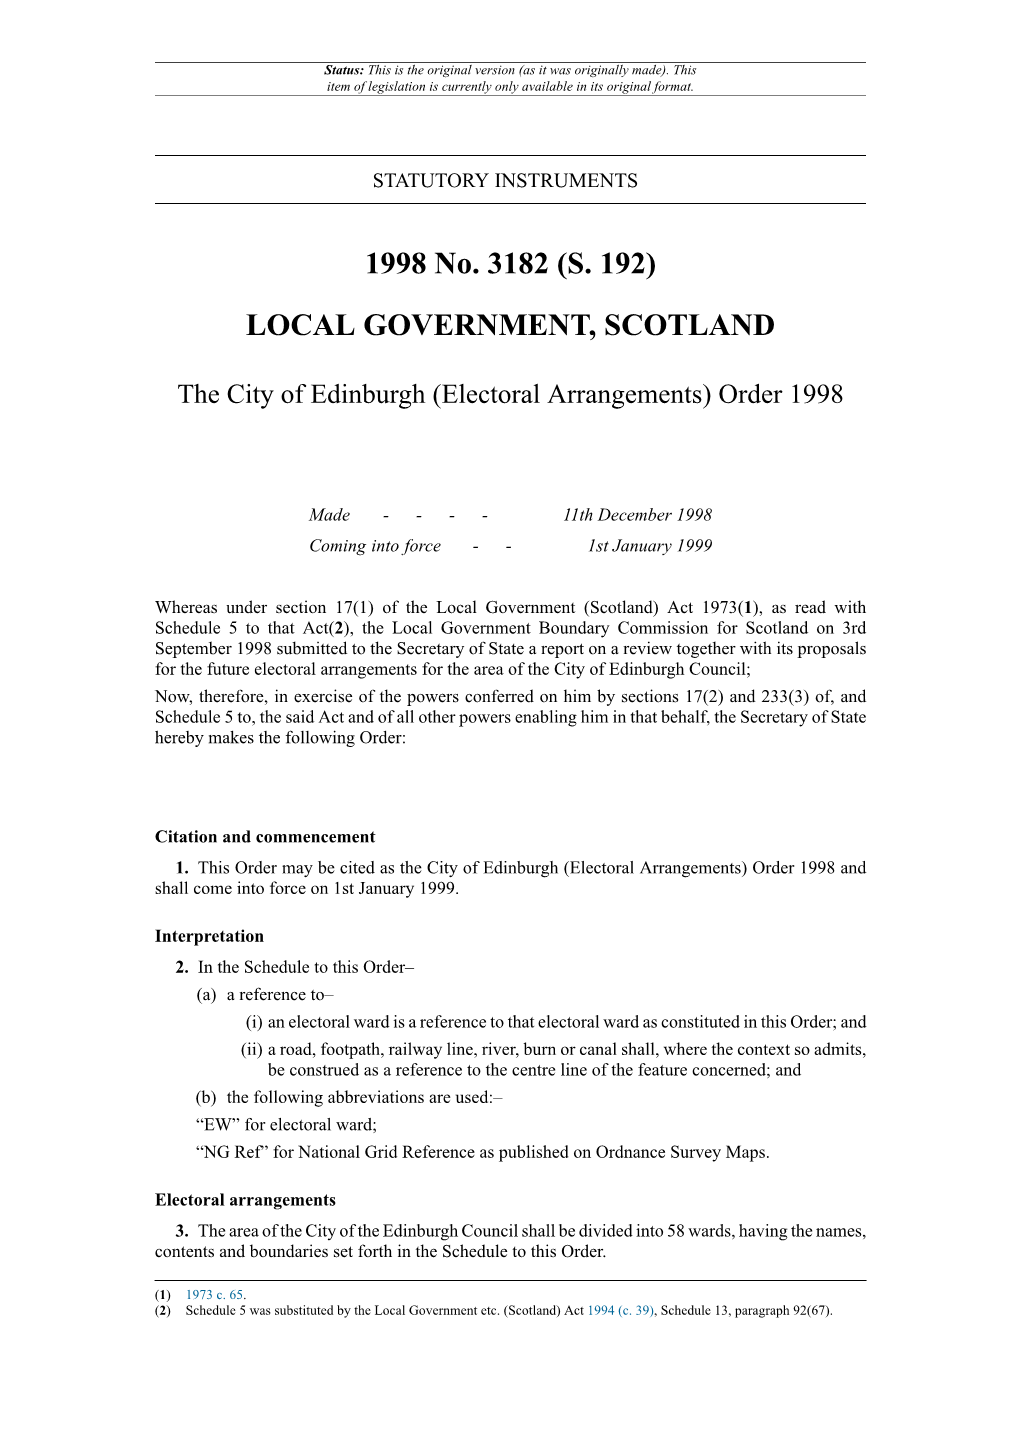 The City of Edinburgh (Electoral Arrangements) Order 1998